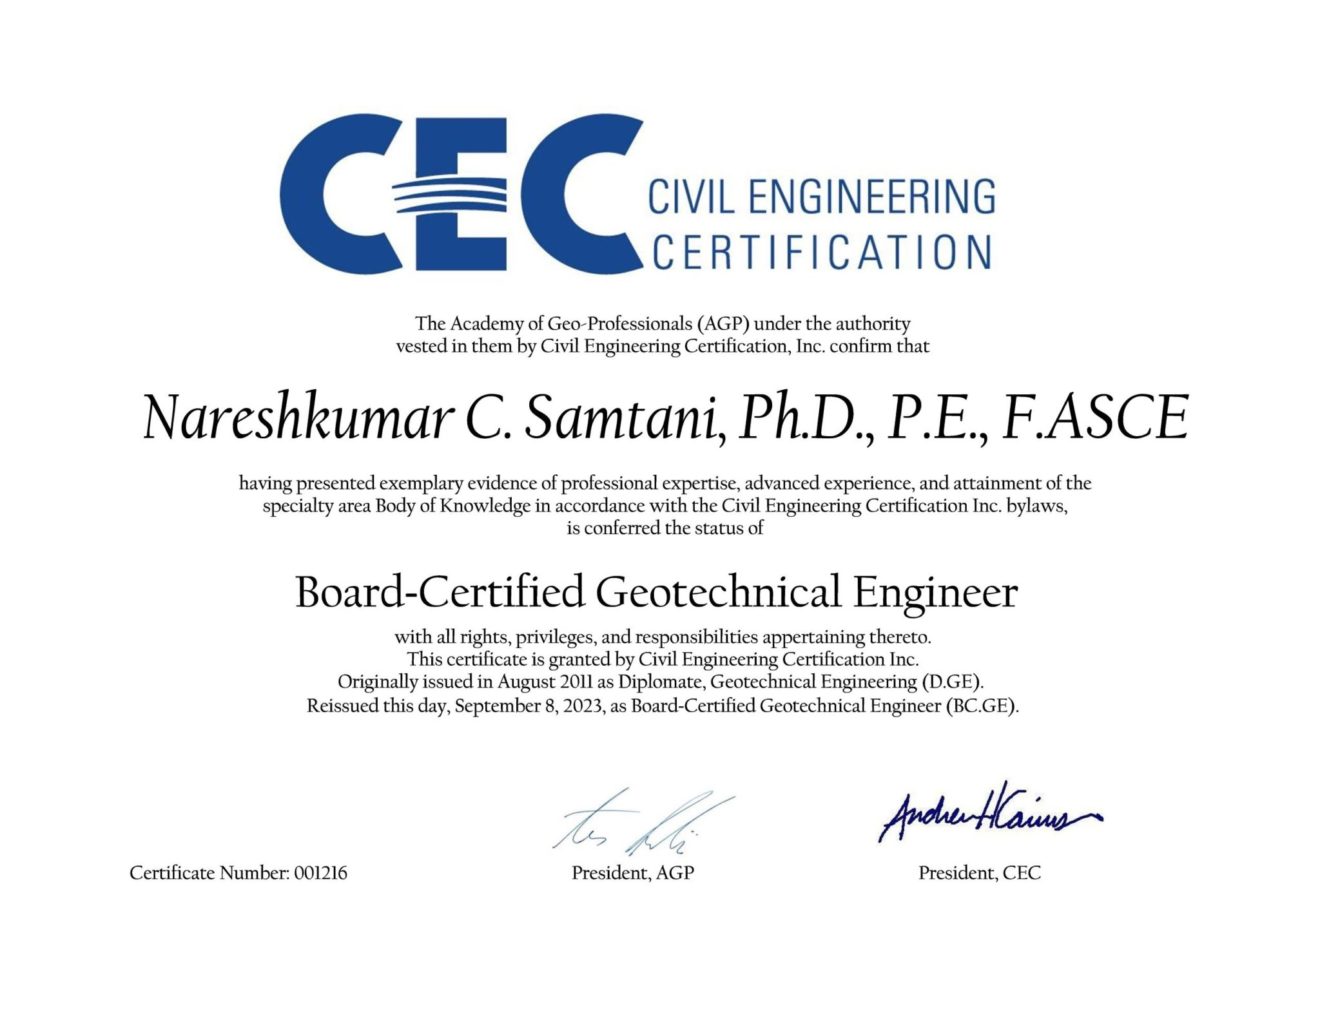 Board-Certified Geotechnical Engineer Certificate